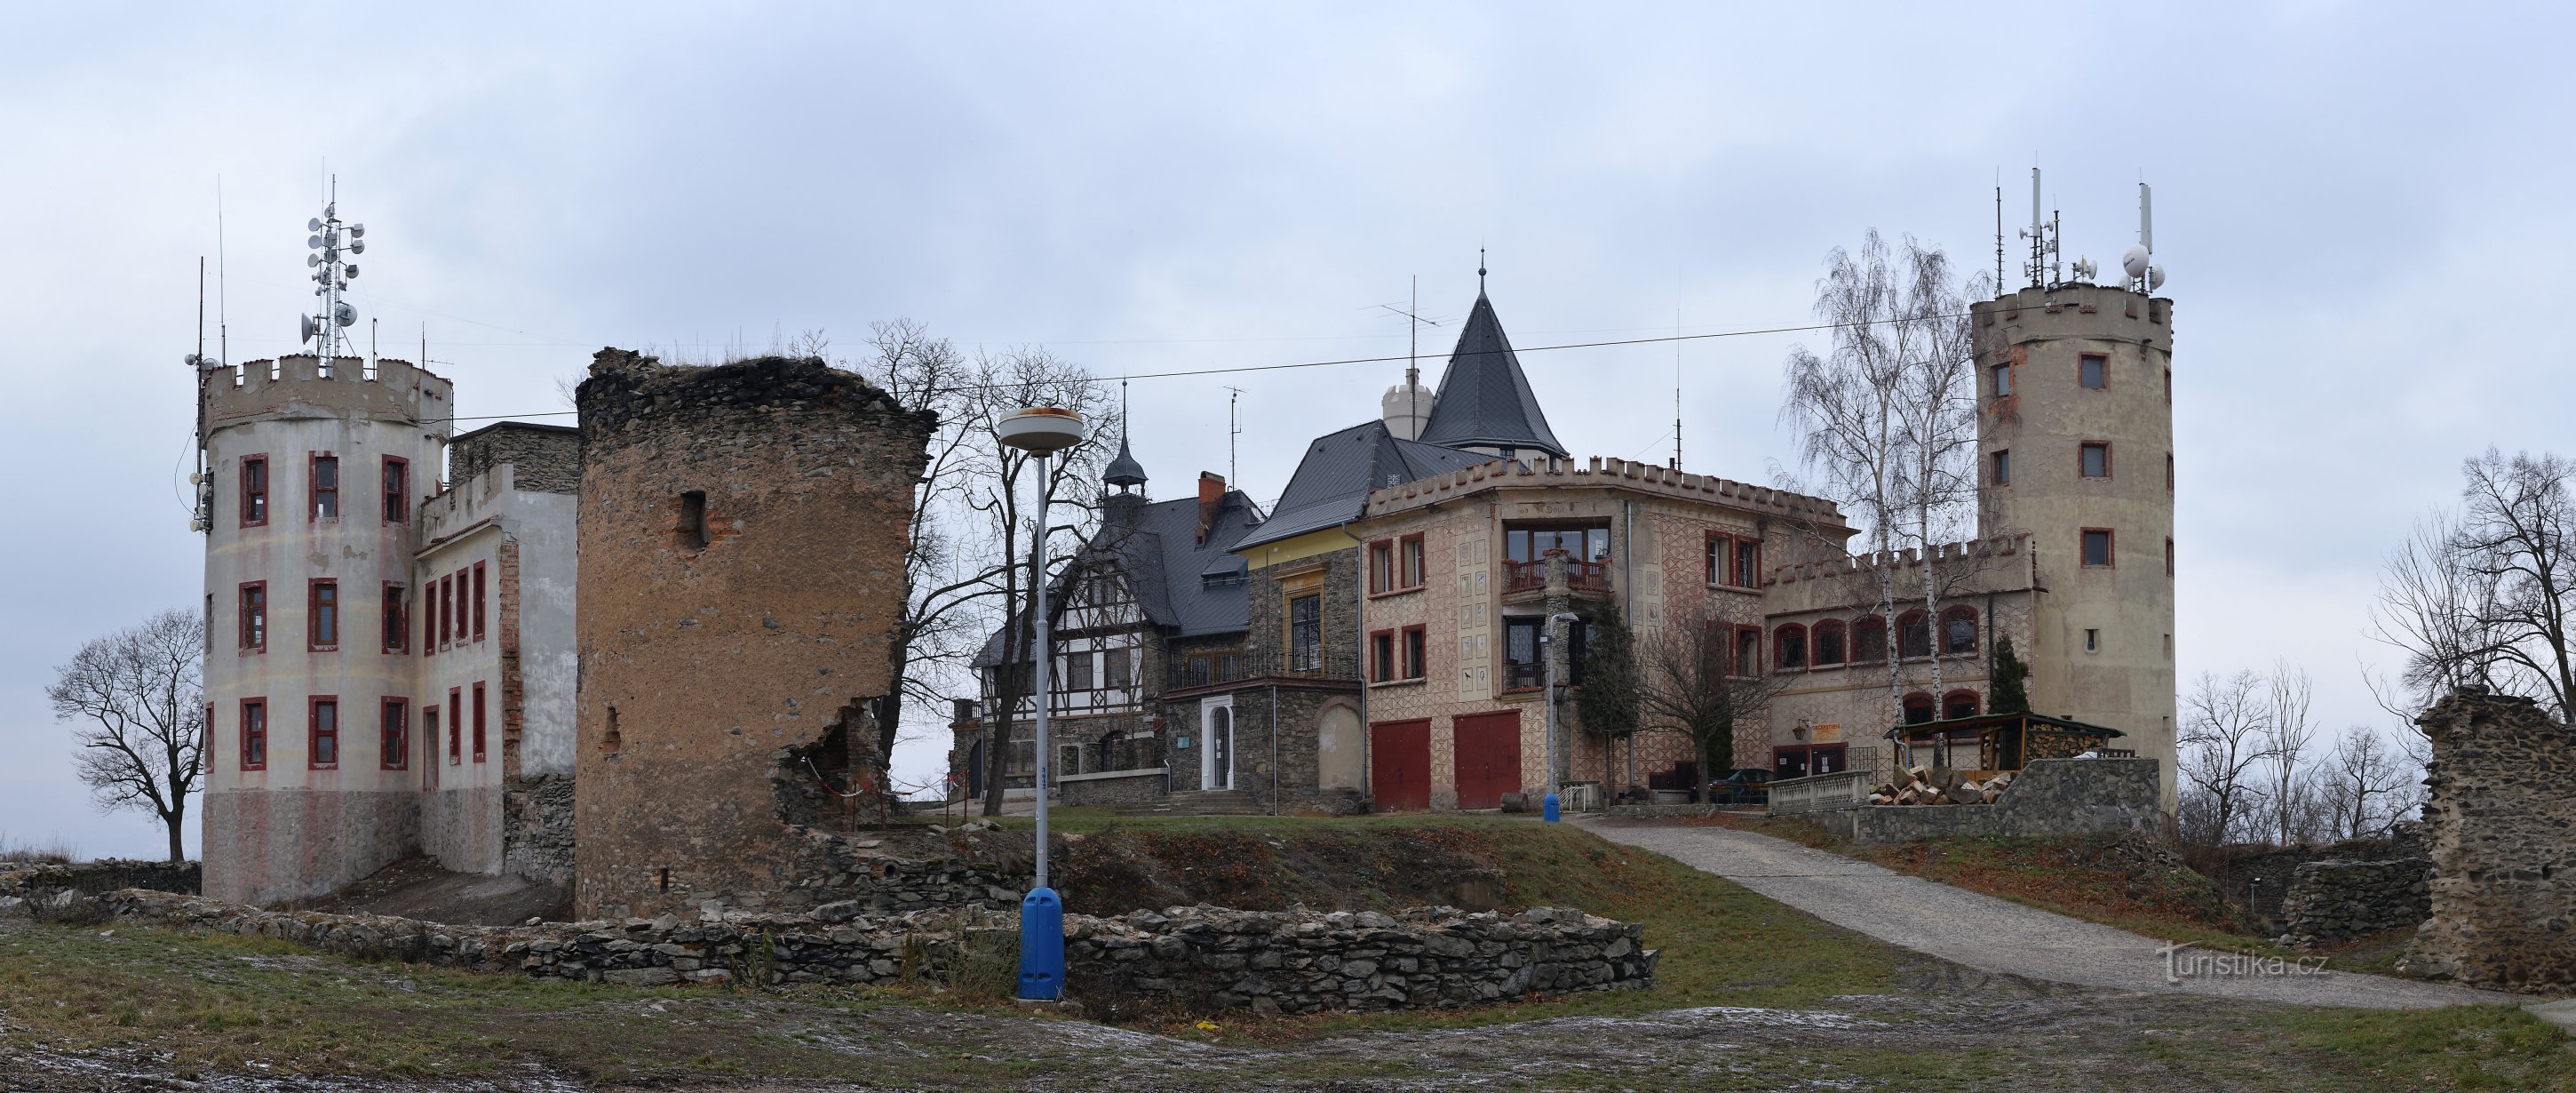 Doubravka slott